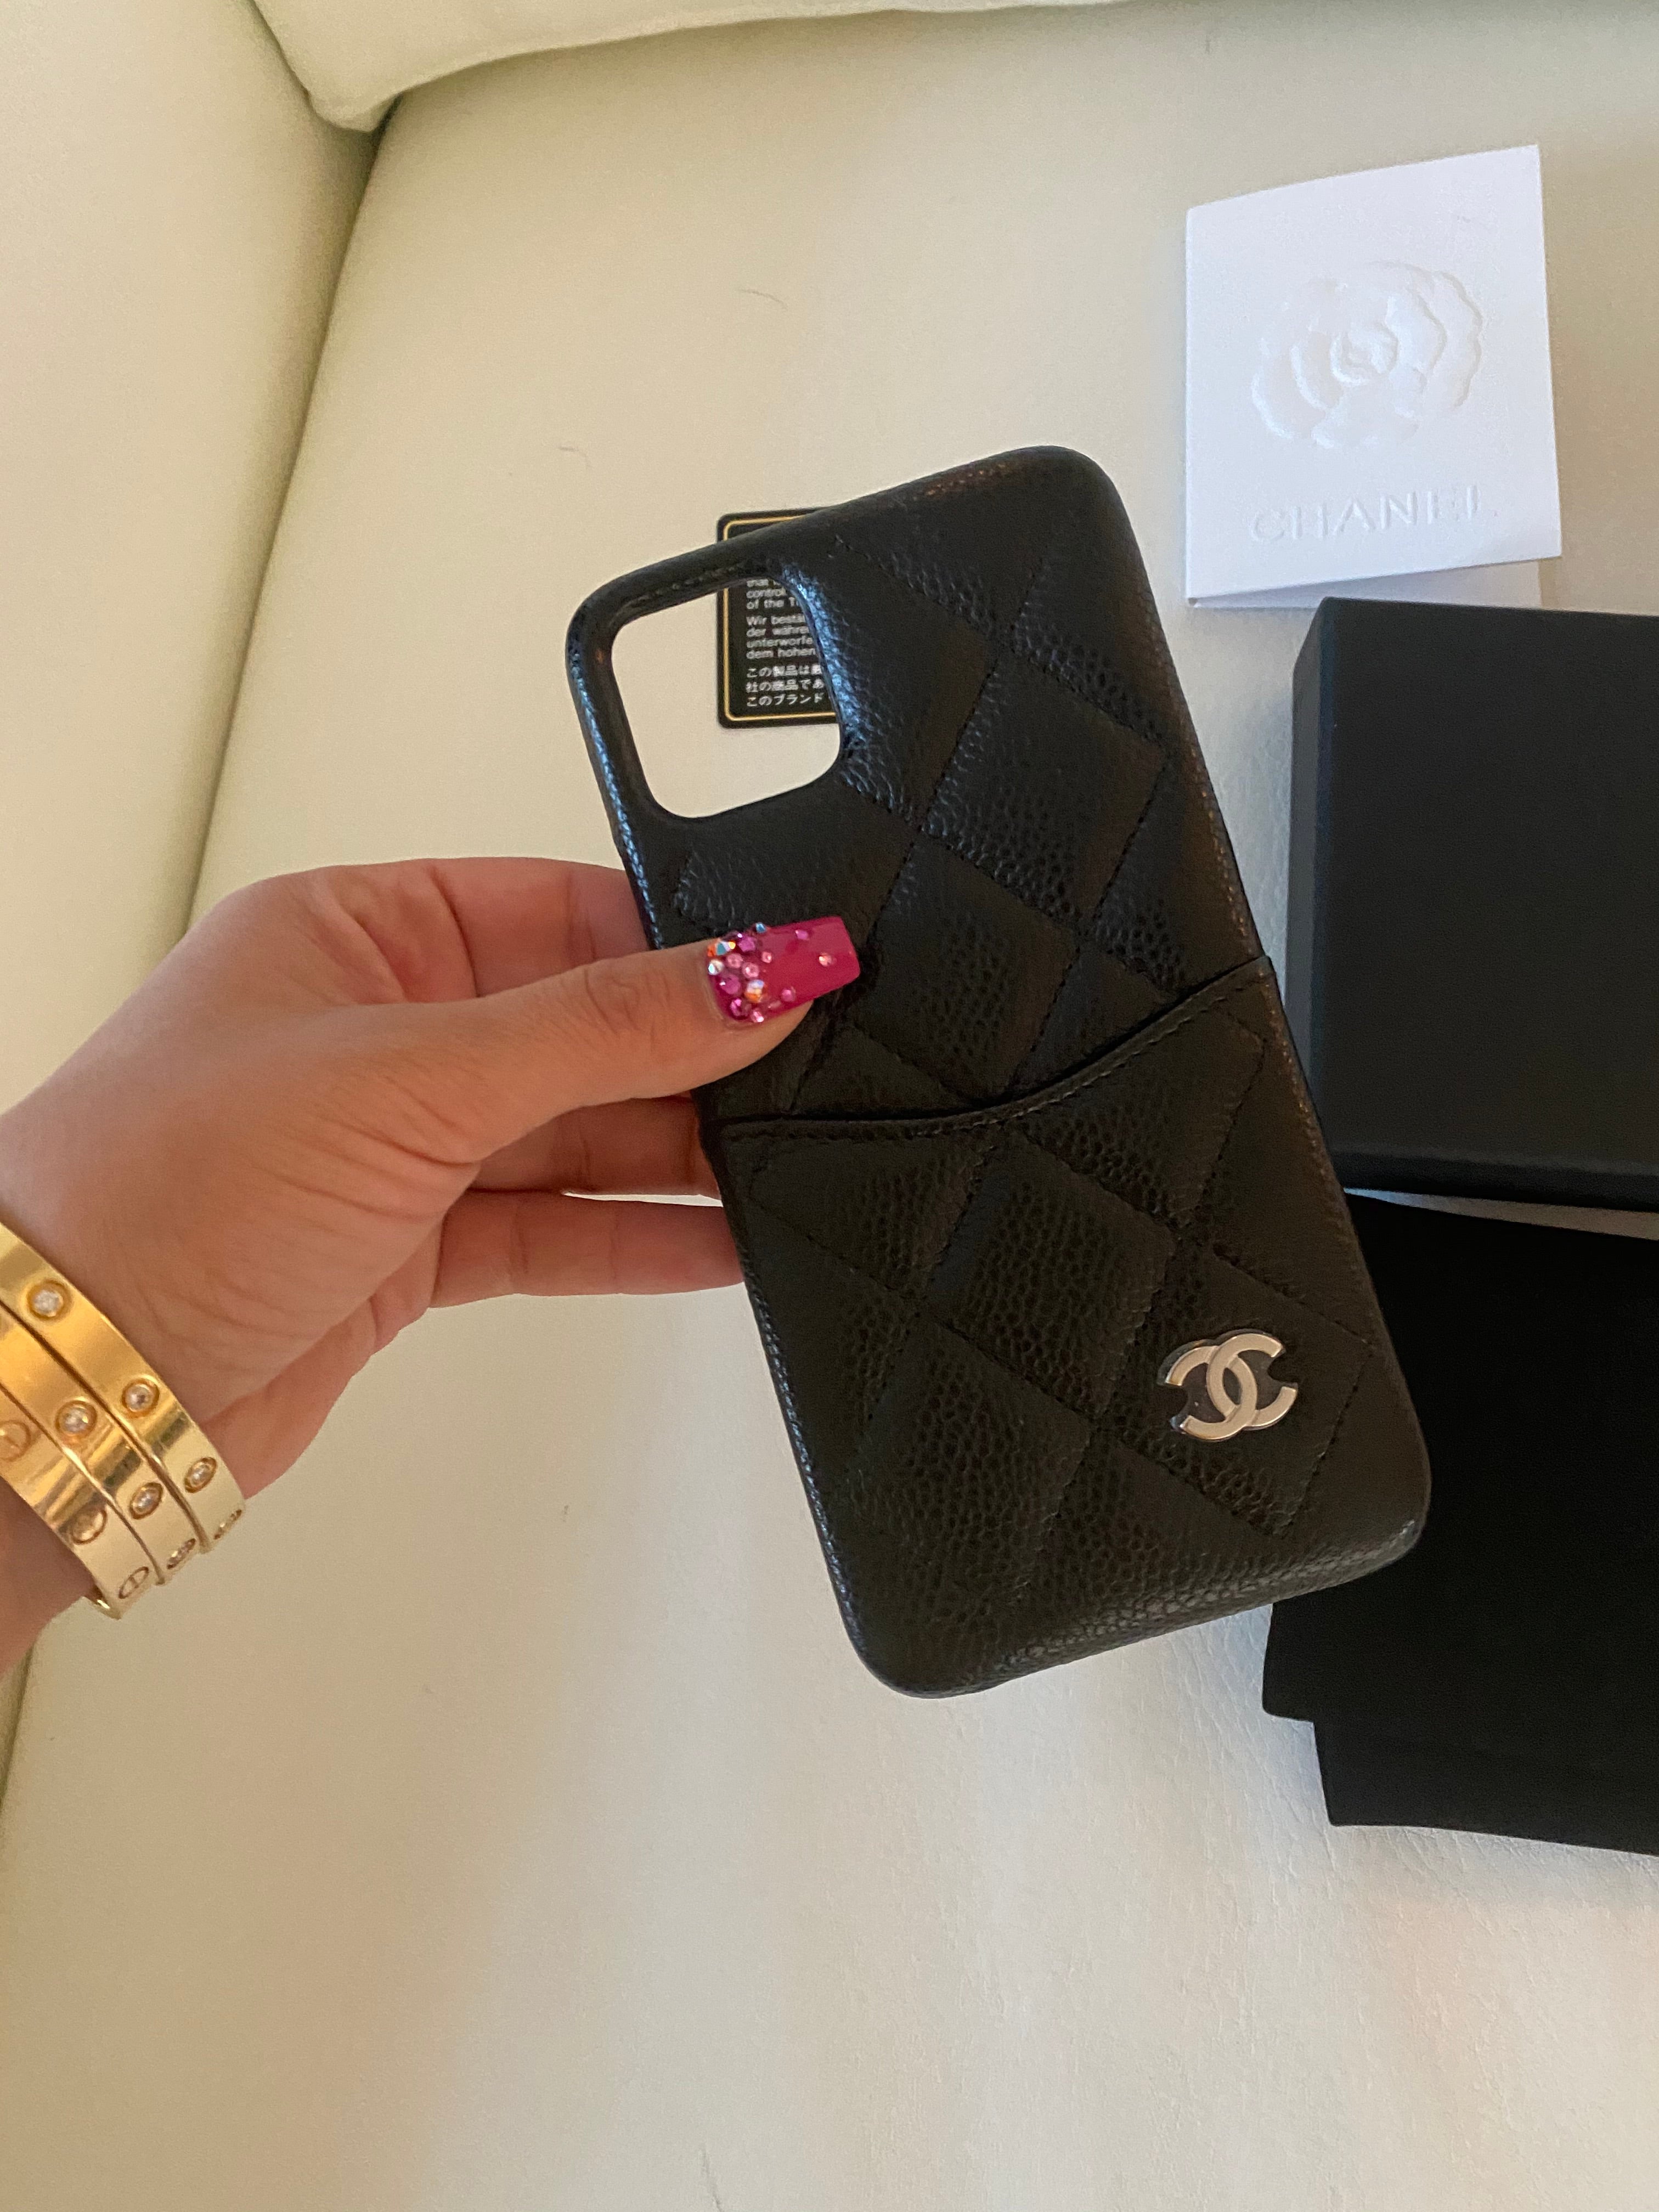 Chanel iPhone 11 Pro Max Case -  UK